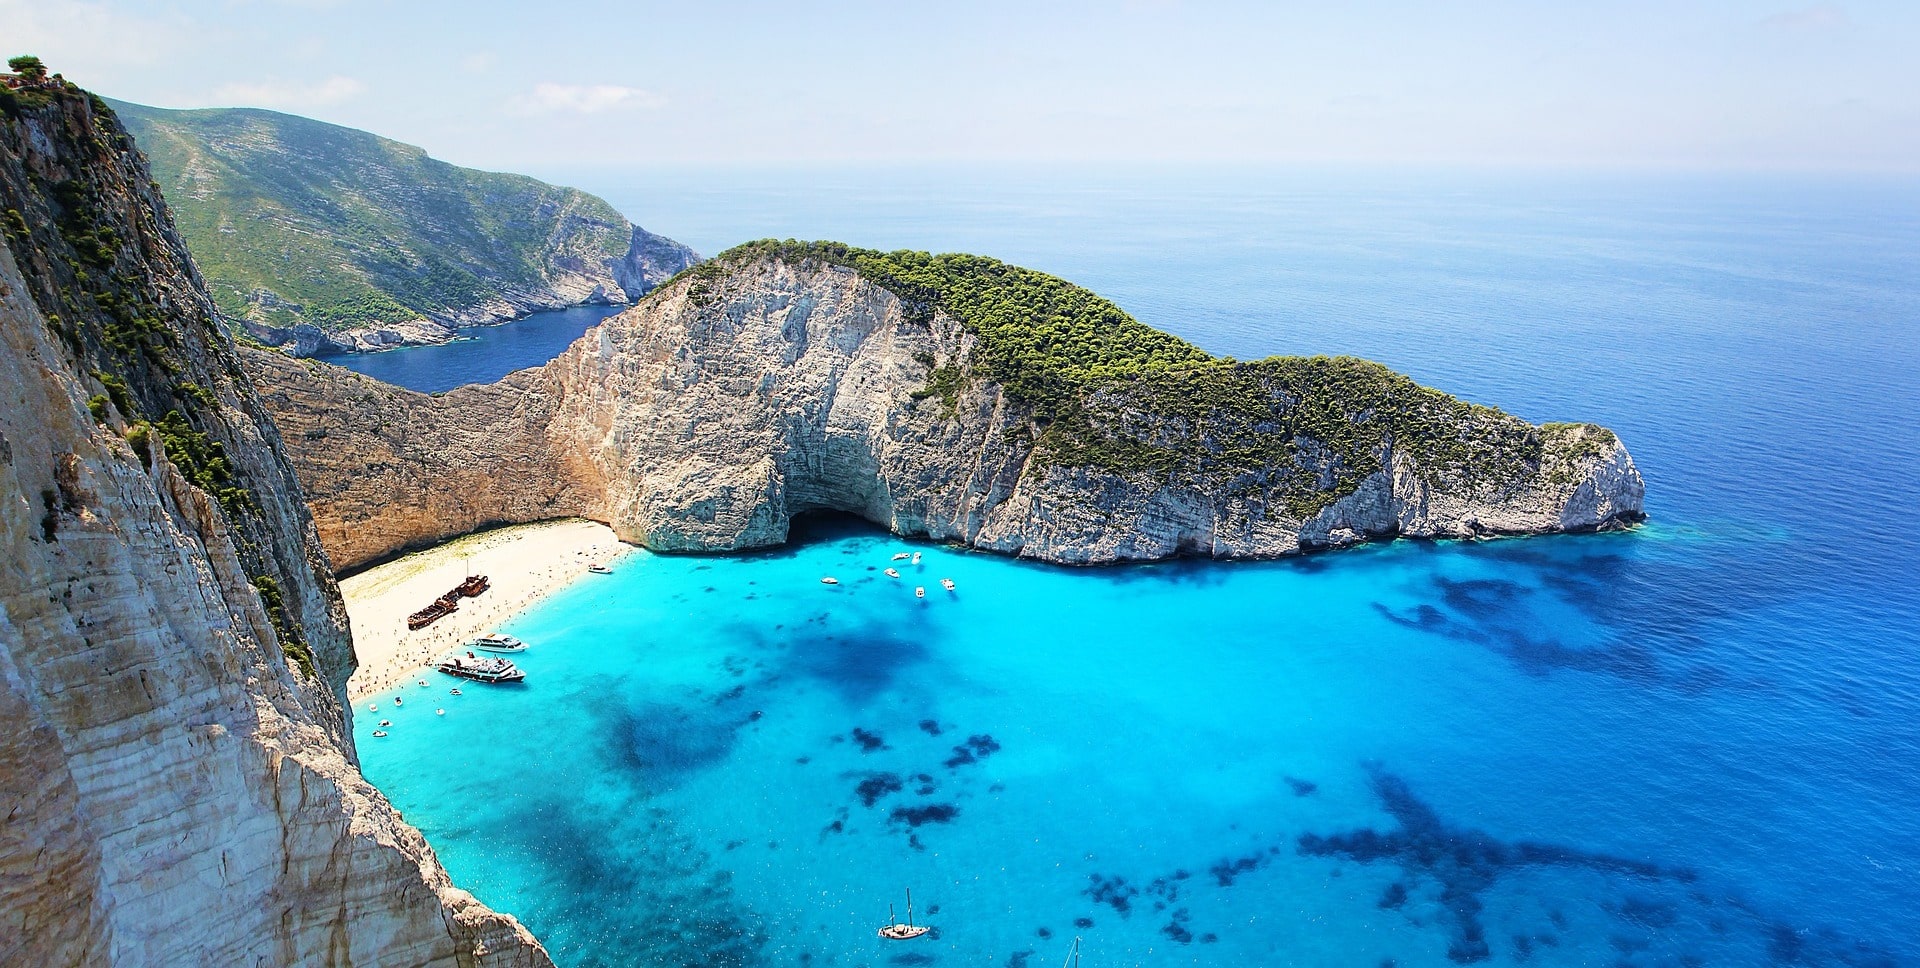 Island hopping in Greece breathtaking landscapes await